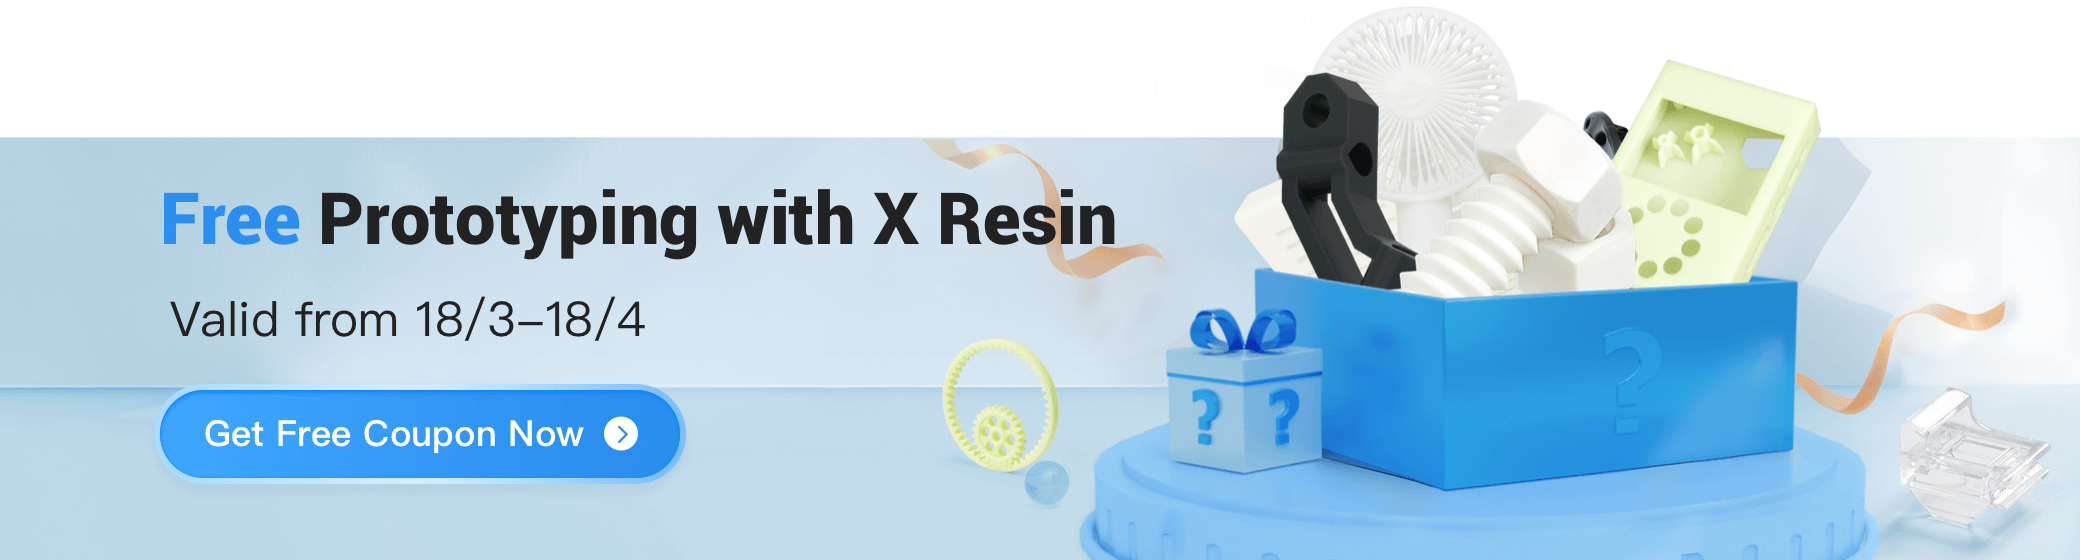 Free X resin